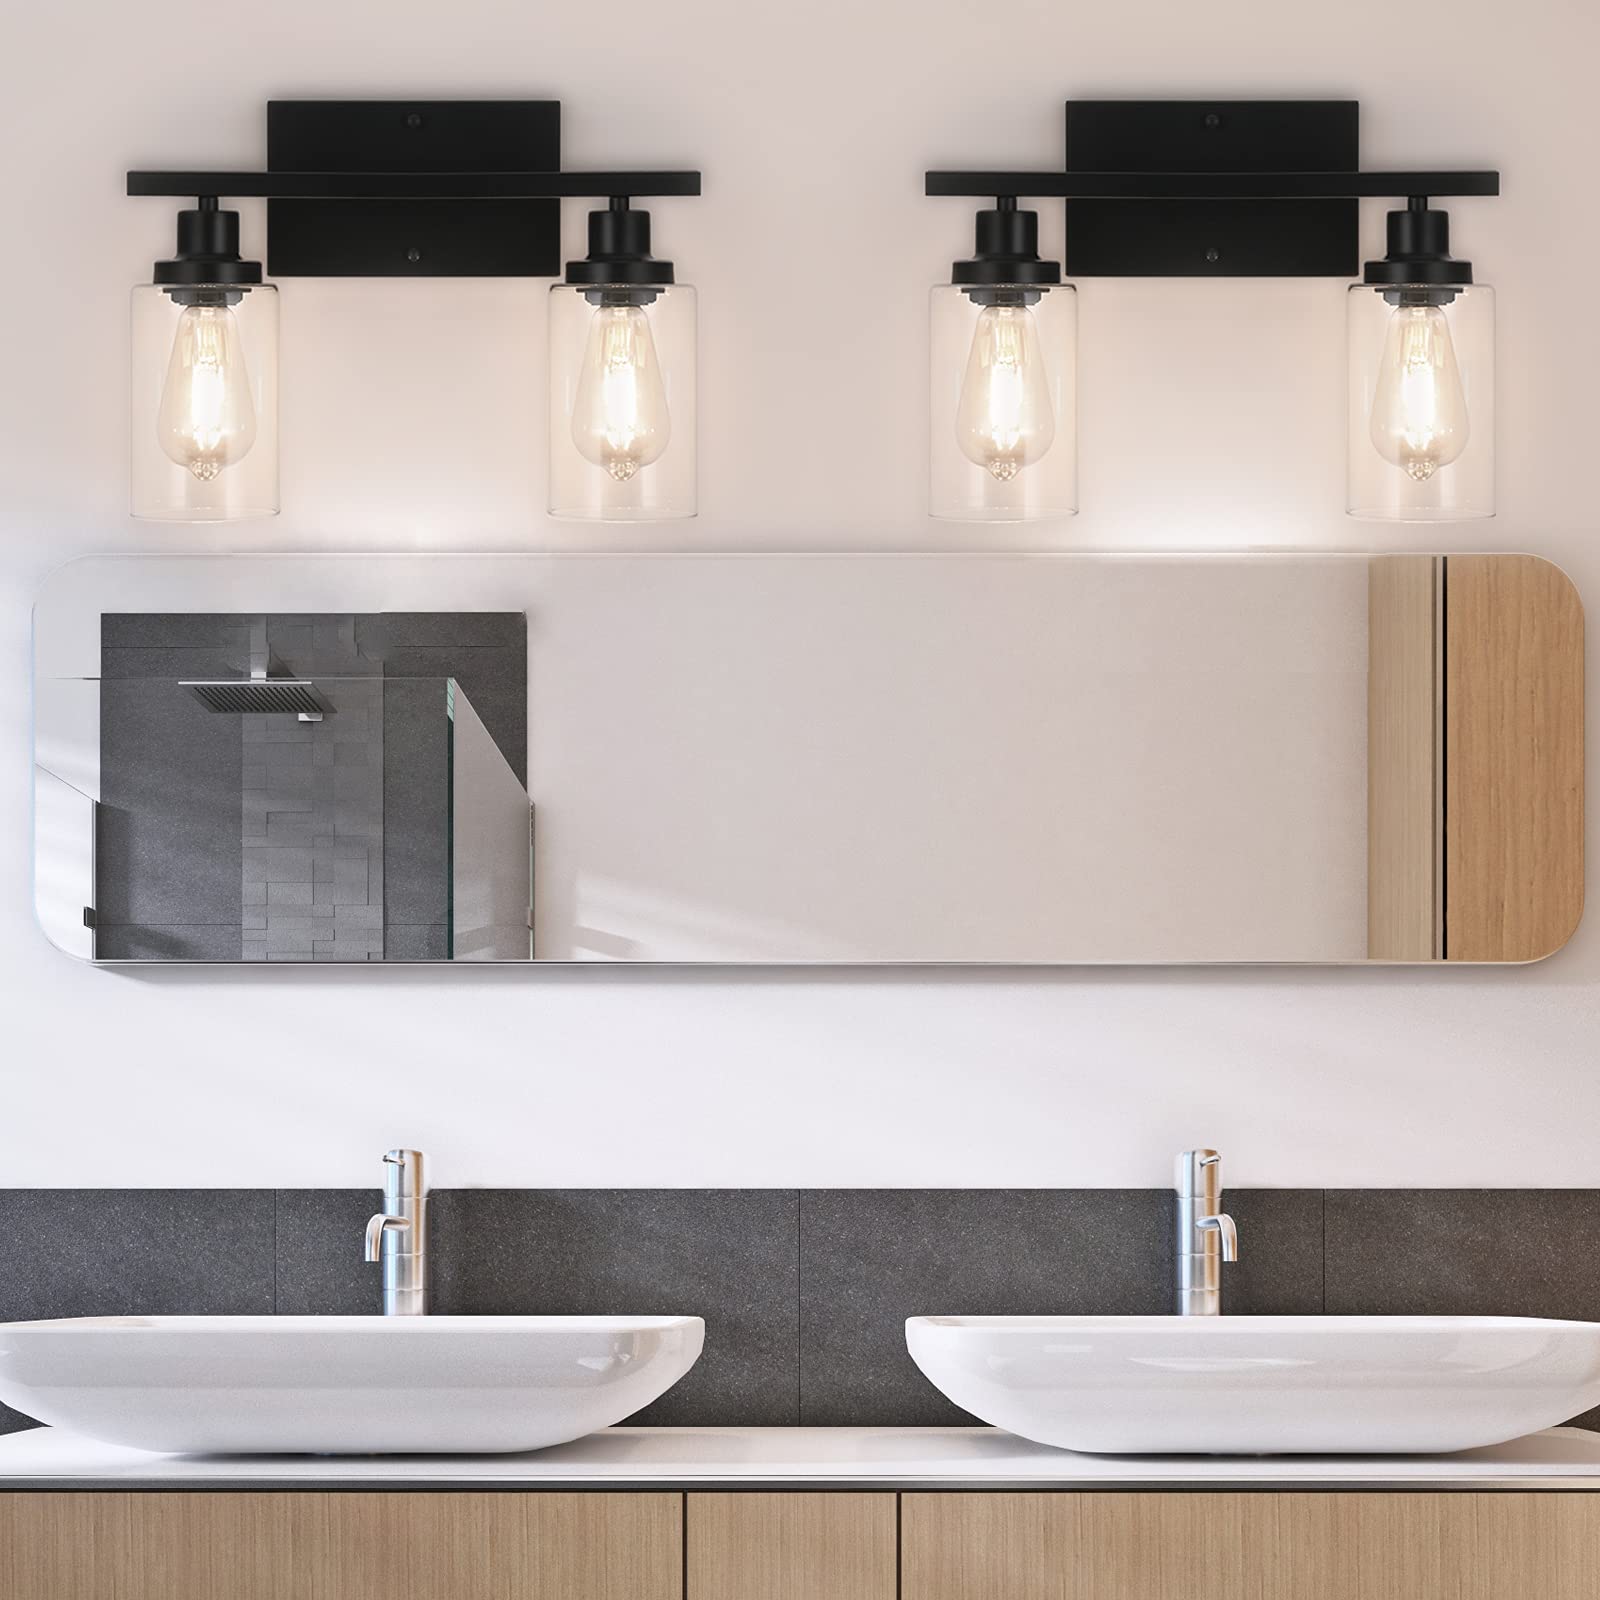 ABEAJAT Bathroom Vanity Light Fixtures, 2 Light Wall Sconces Lighting Bathroom Lights with Clear Glass Shades, Bath Wall Lights Wall Lamp for Mirror, Kitchen, Living Room, Bedroom, Hallway (Black)